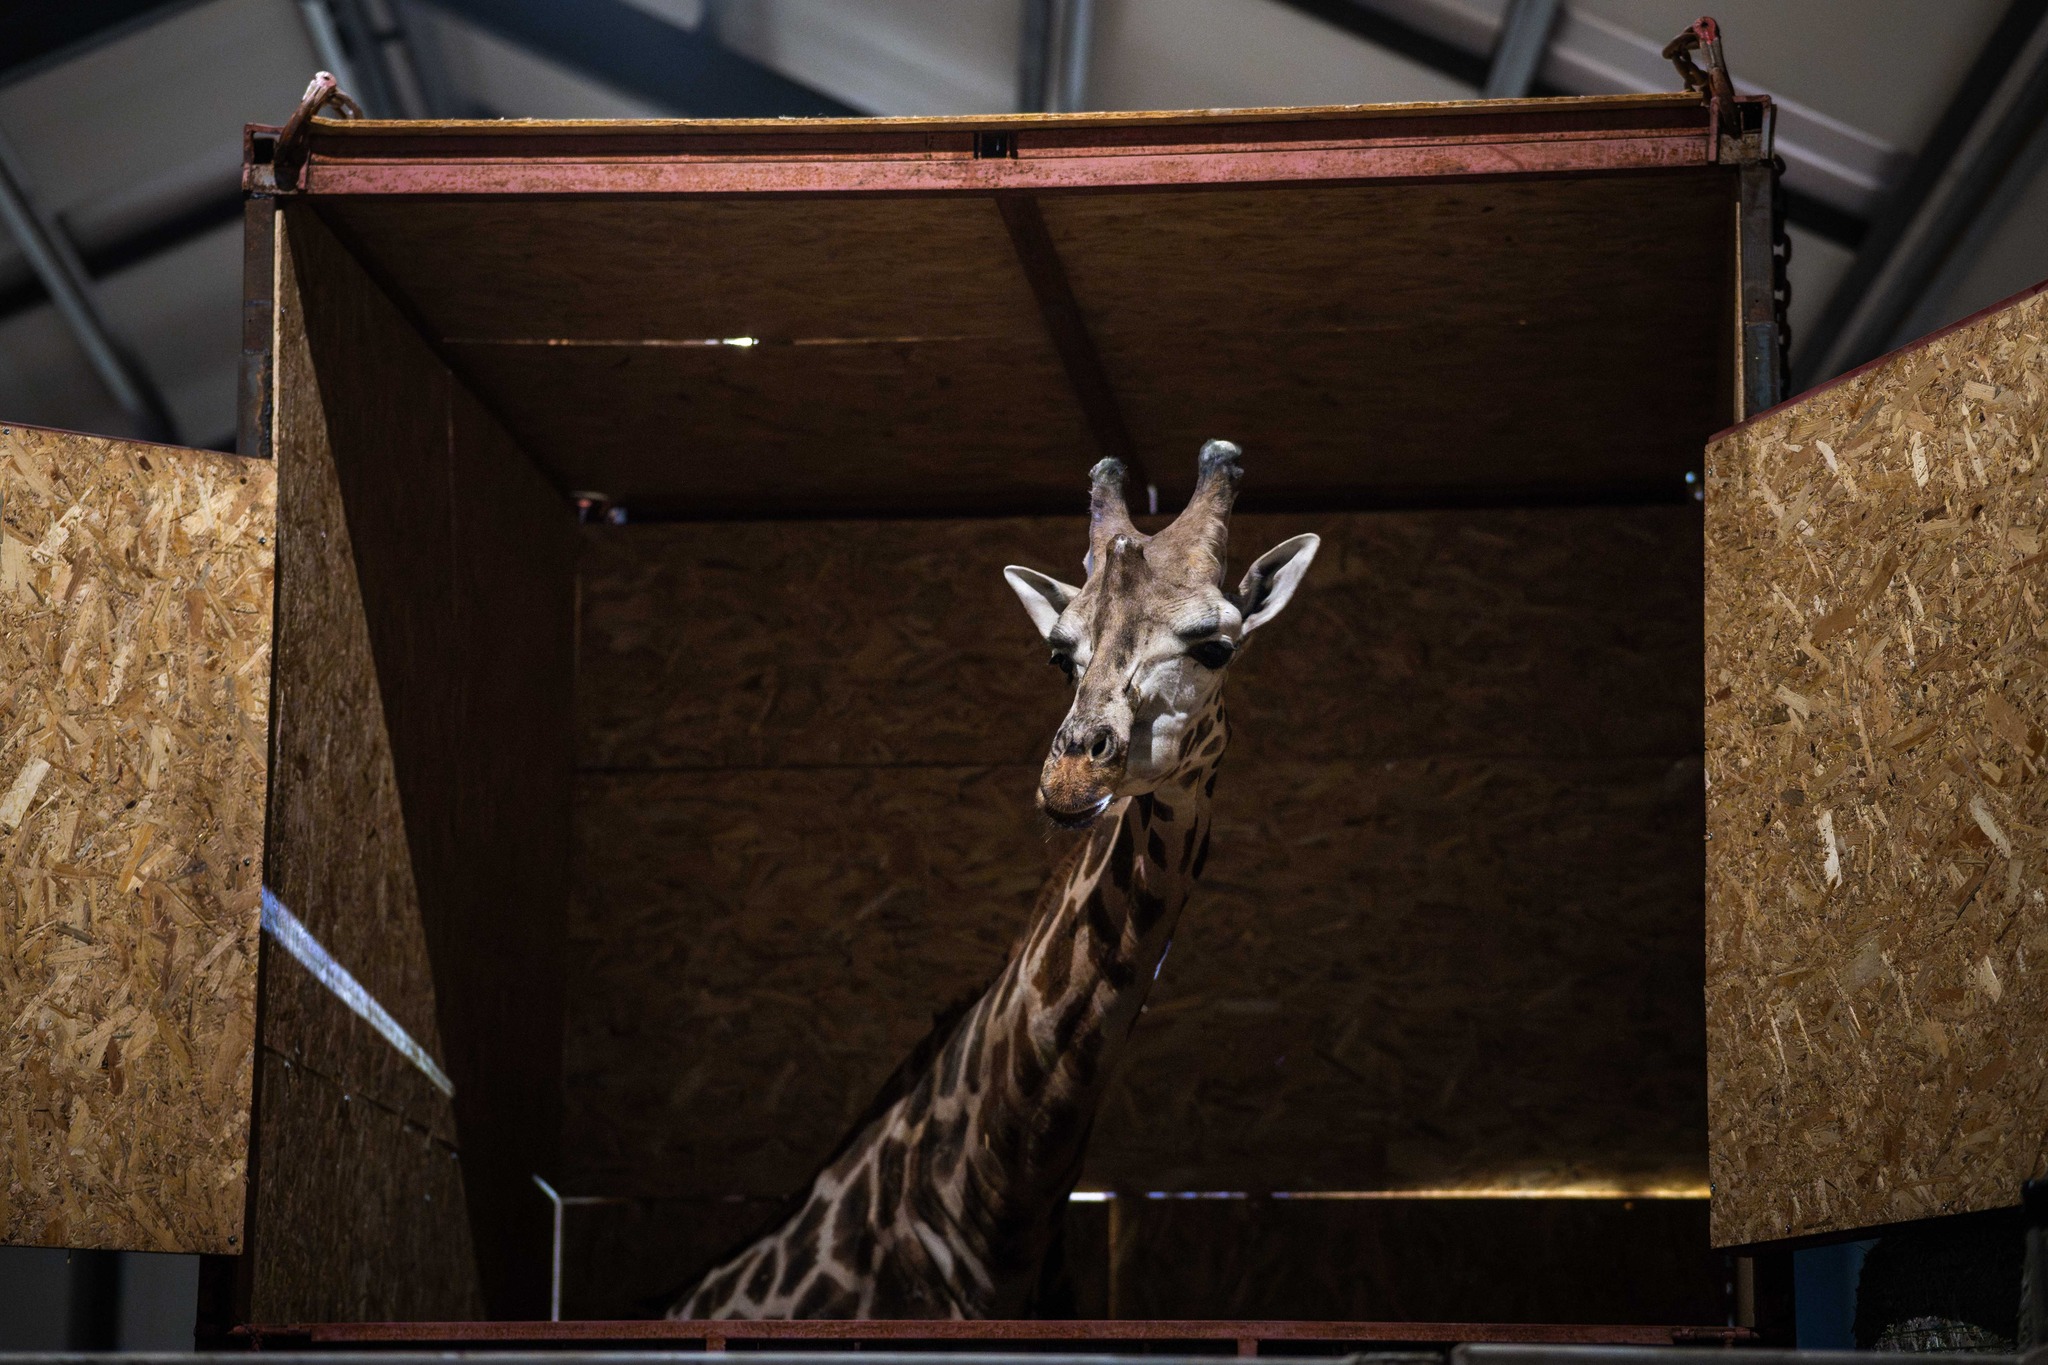 Giraffe from War-Torn Ukraine Finds New Home in Richter Safari Park